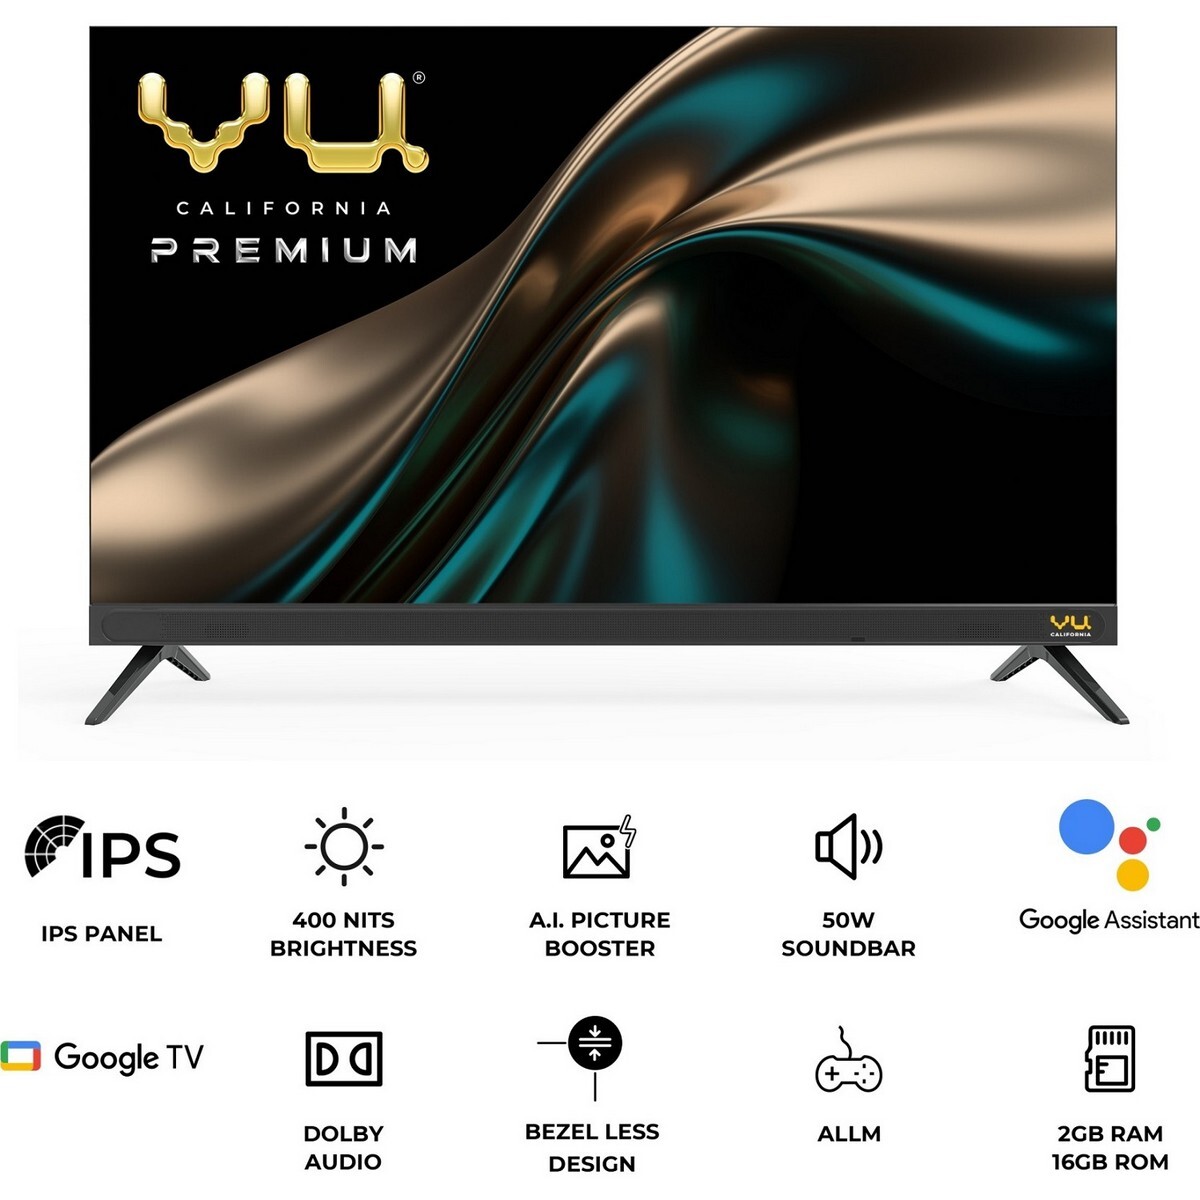 VU Ultra HD Google TV 43CA 43"